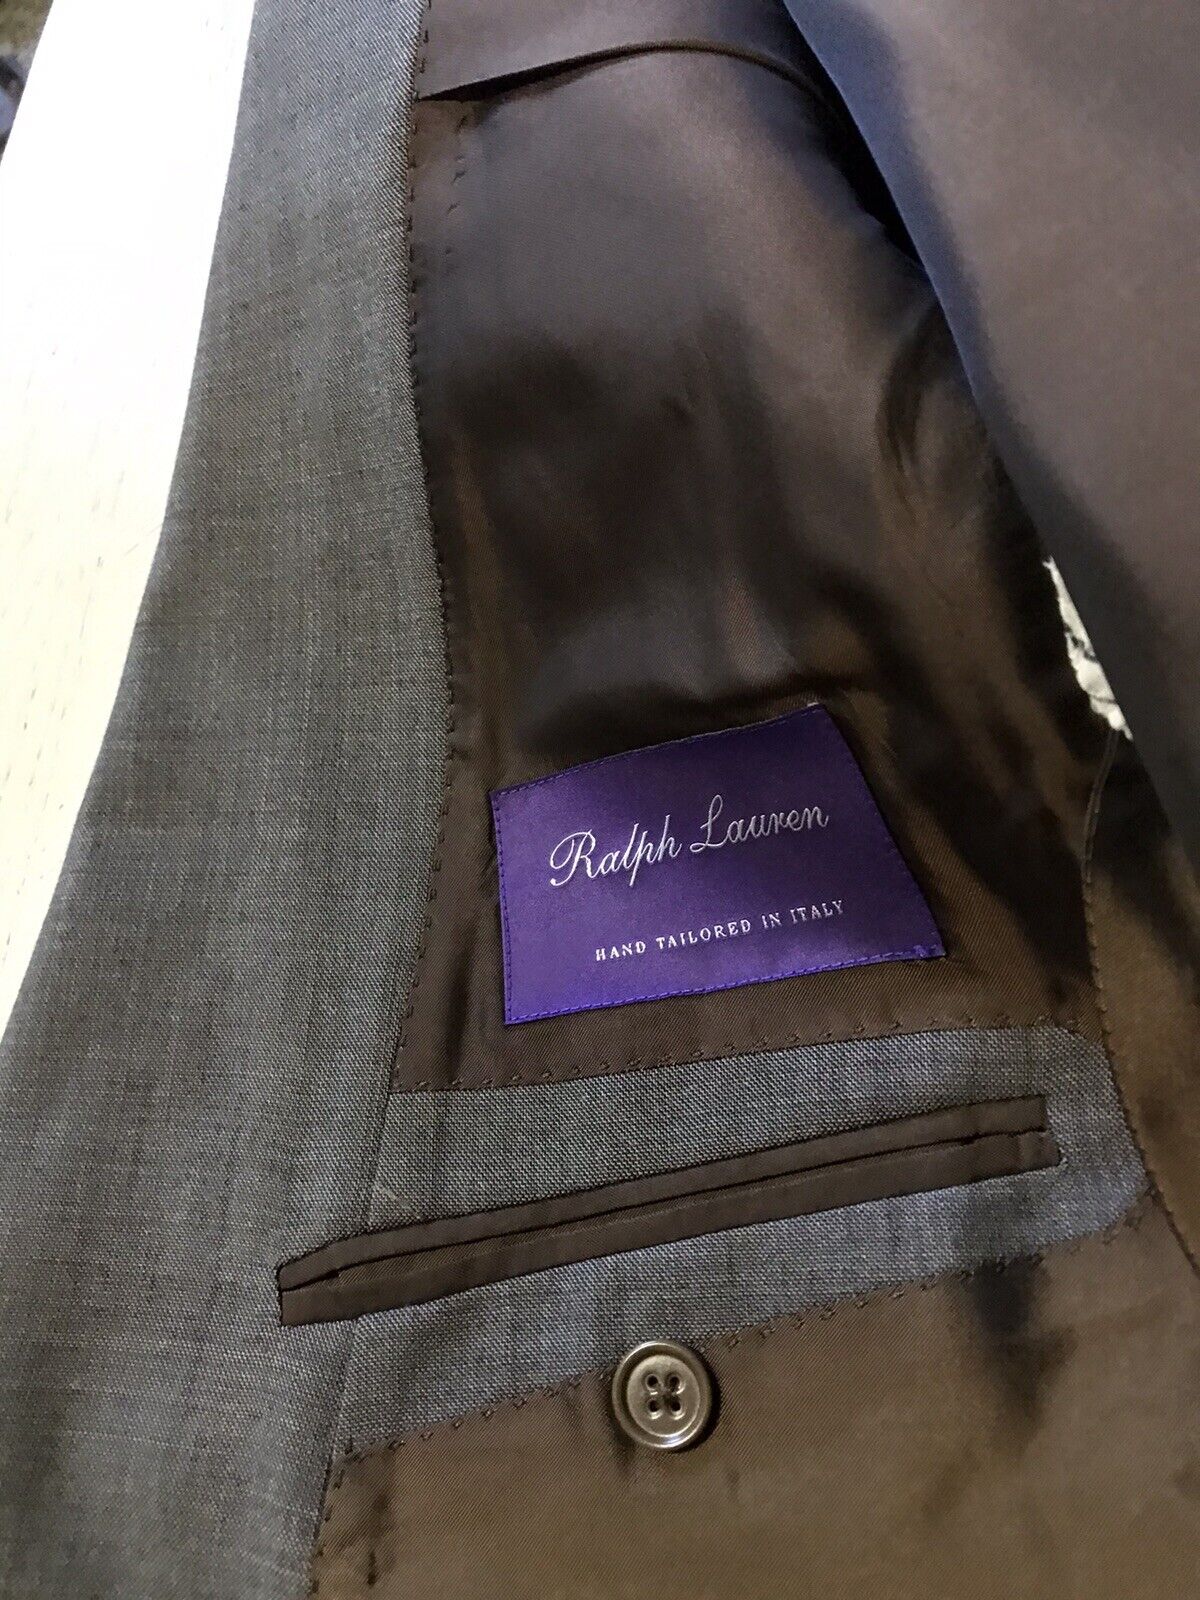 New $3295 Ralph Lauren Purple Label Mens Suit LT Brown 44R US/54R Eu Italy